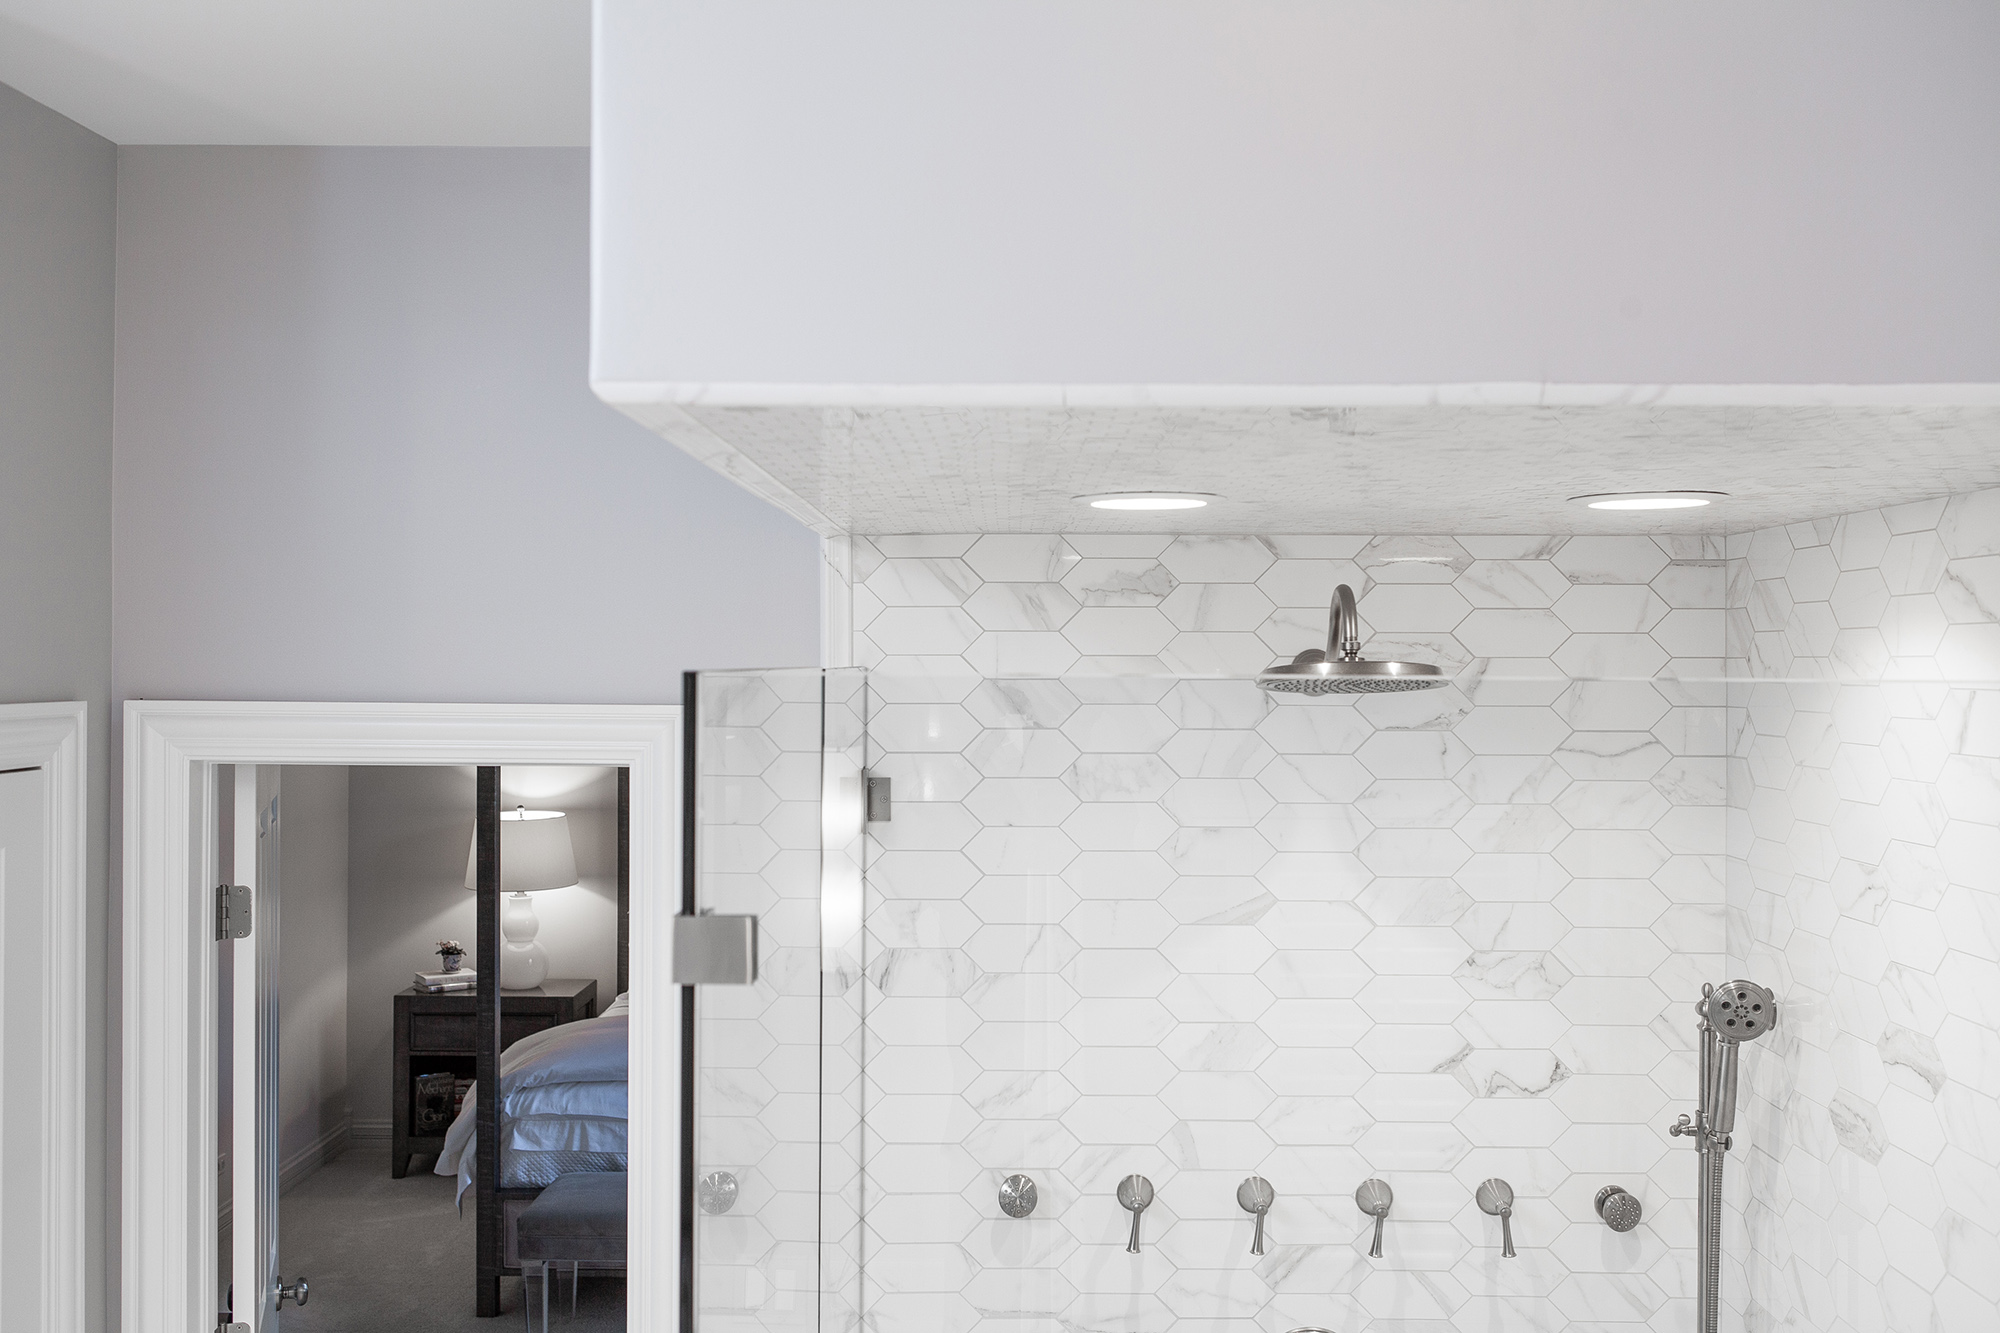 marble tile on ceiling of shower